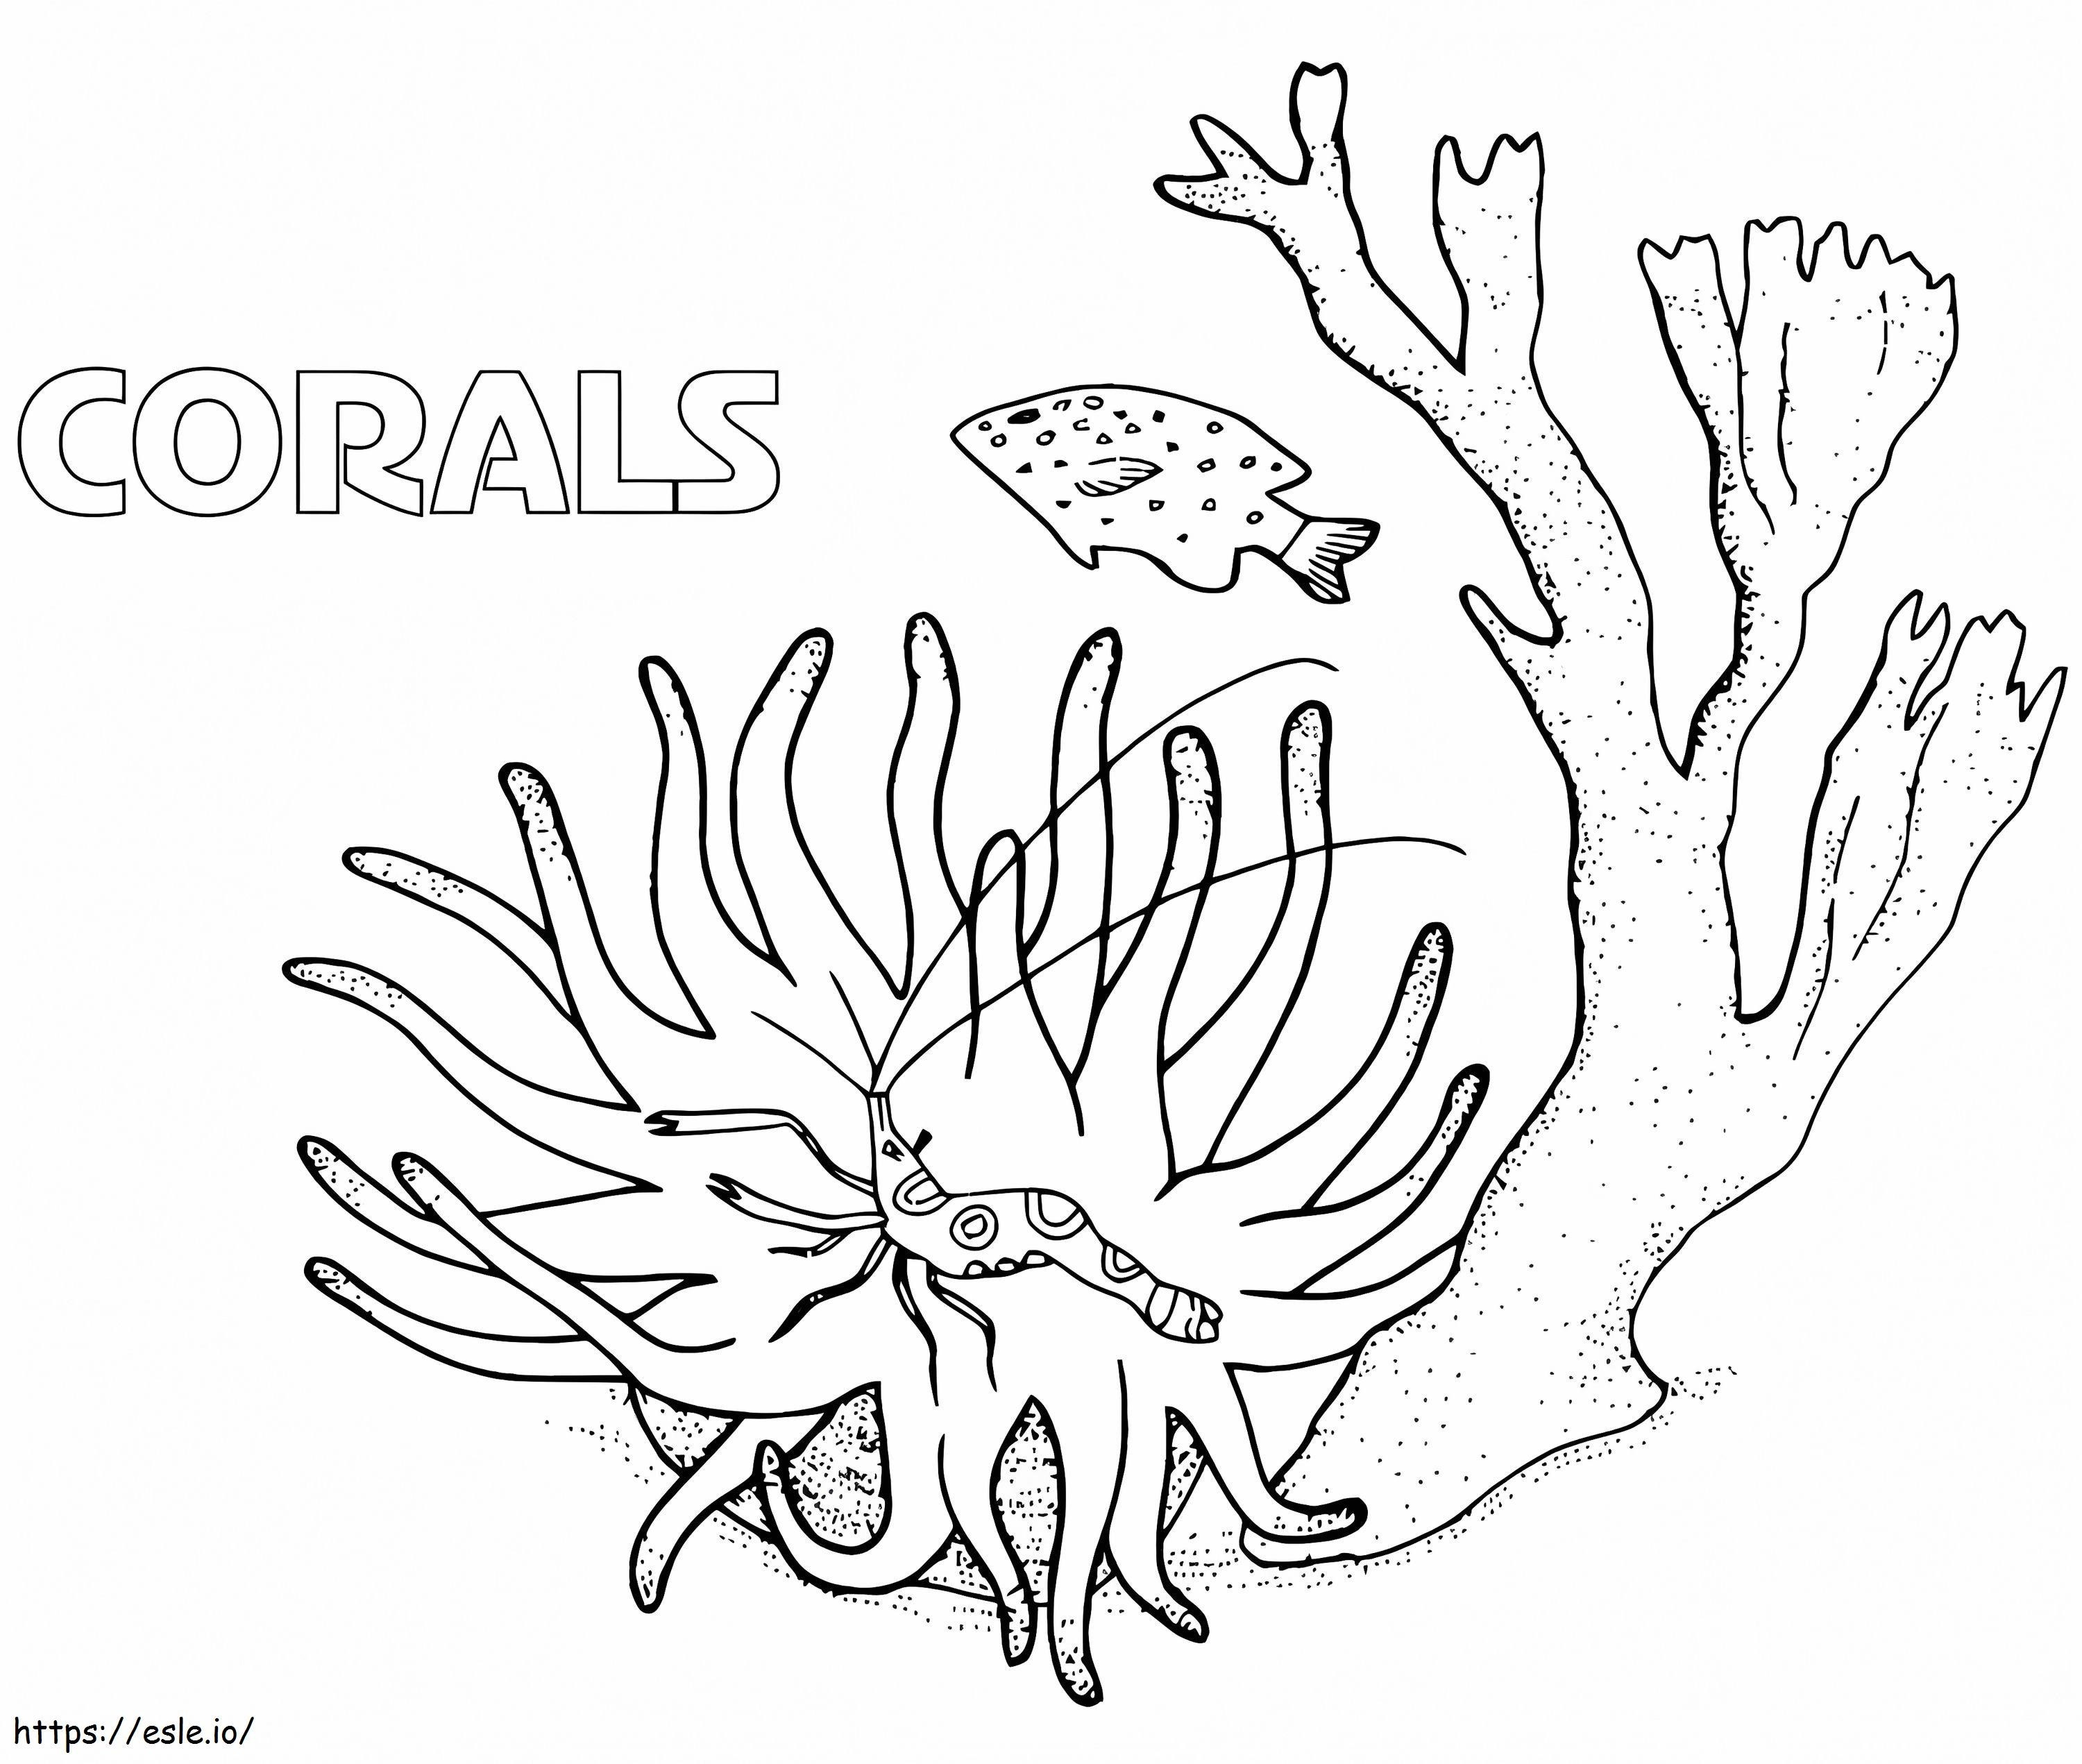 Corals coloring page